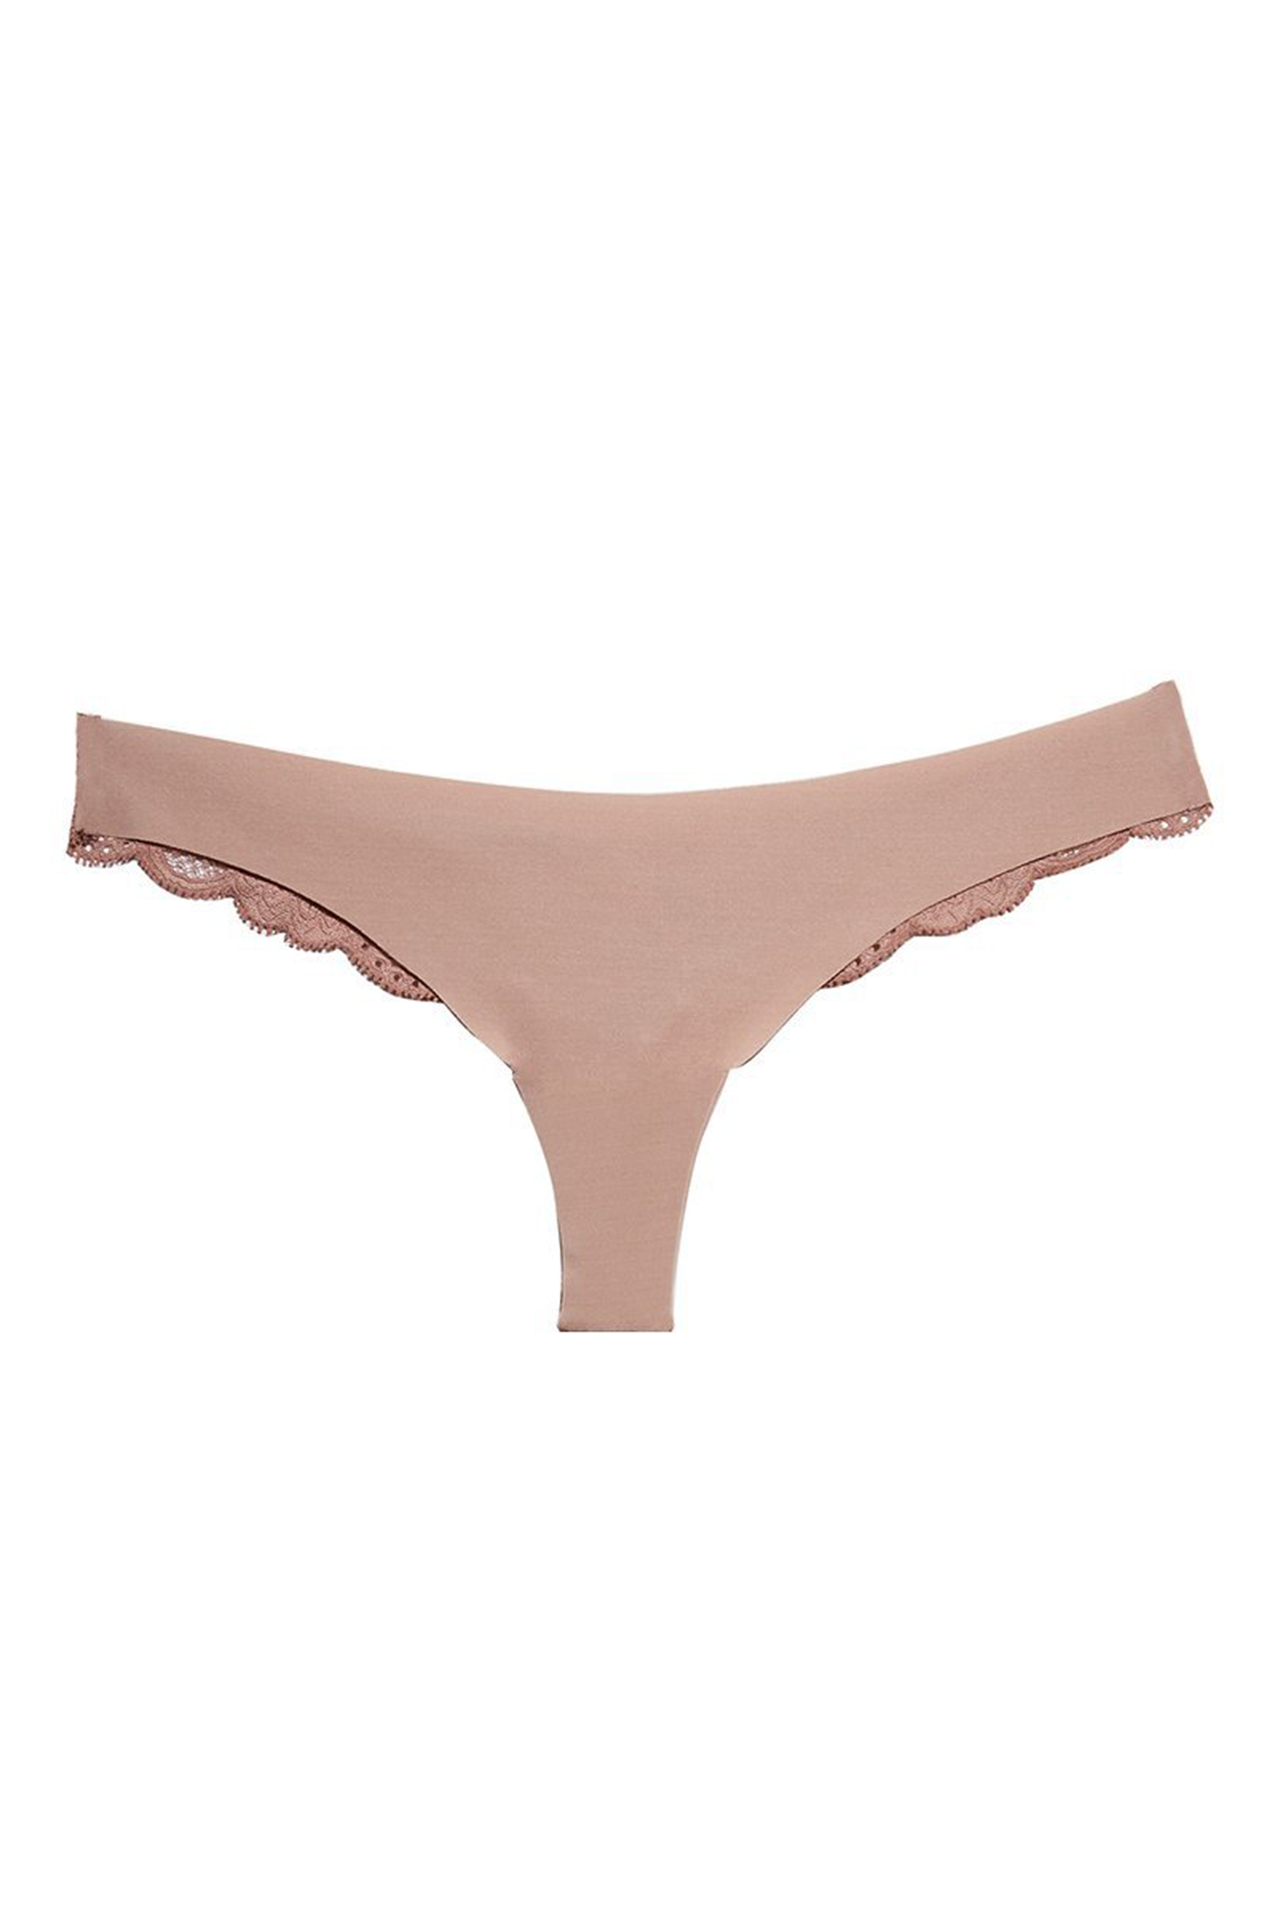 Fleur Du Mal Charlotte Lace Seamless Thong Panty Pack Tan Front Detail Image (6555860926579)